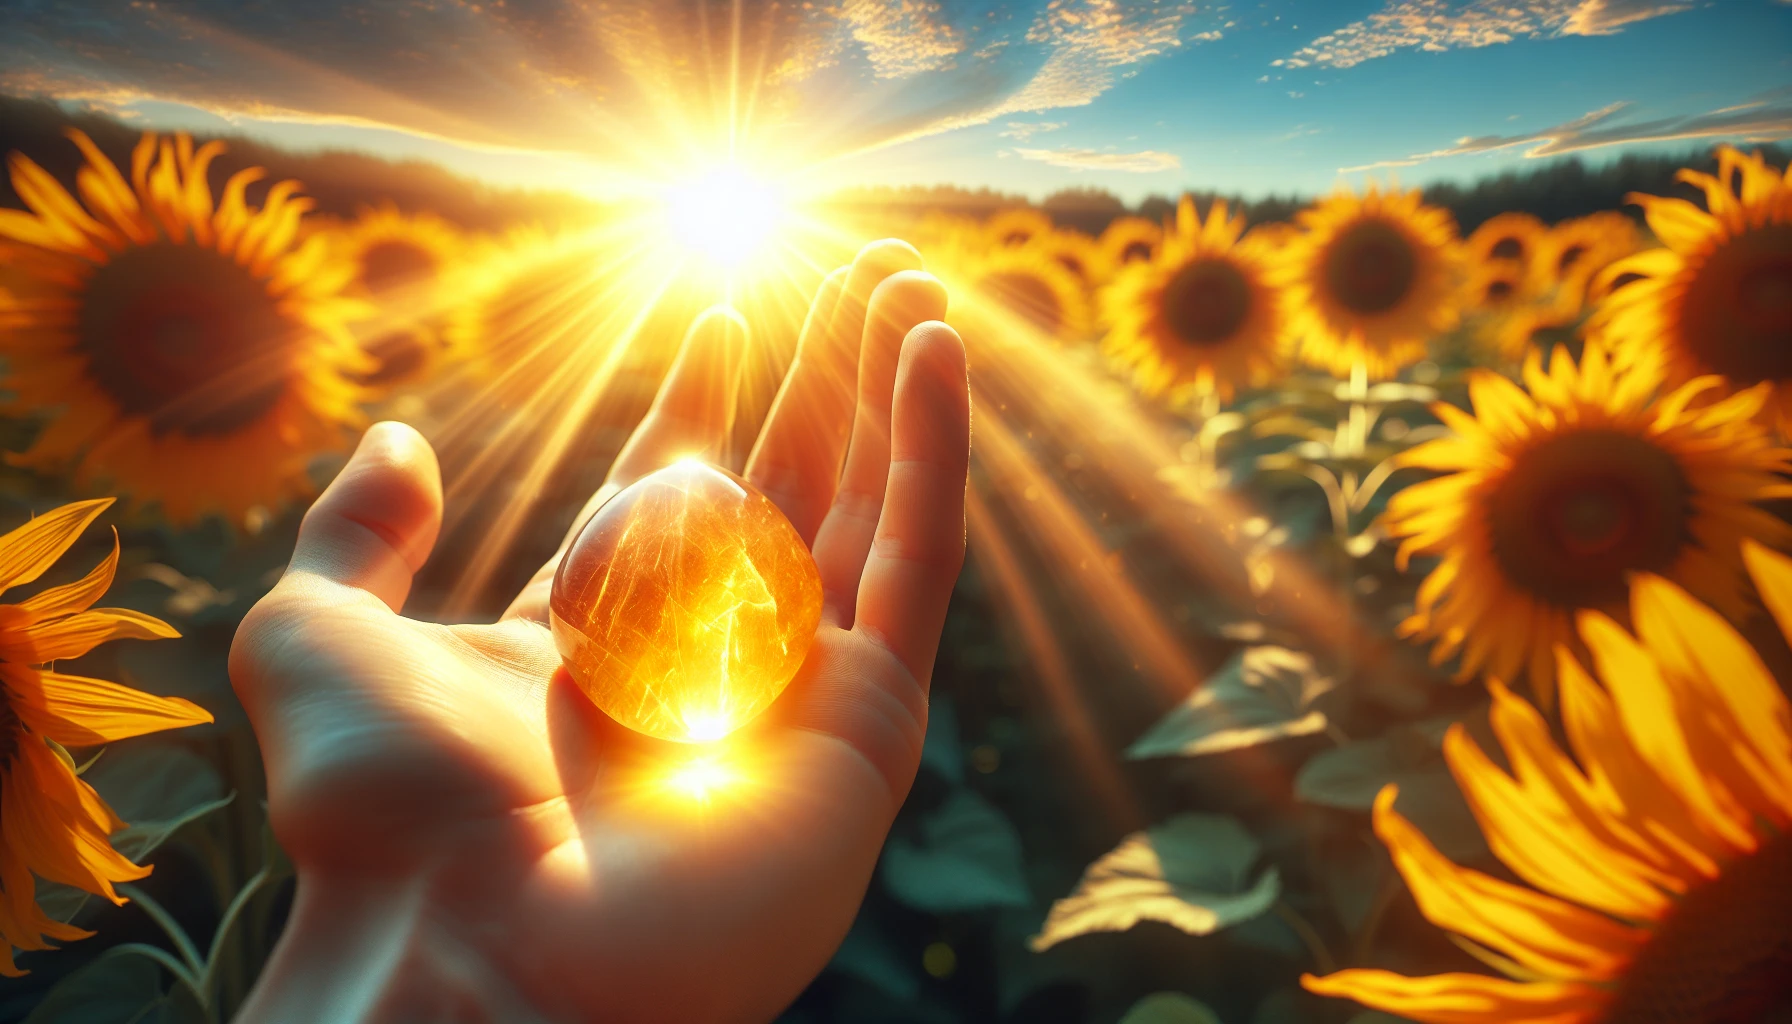 Sunstone symbolizing inner power, positive energy, abundance, and good fortune